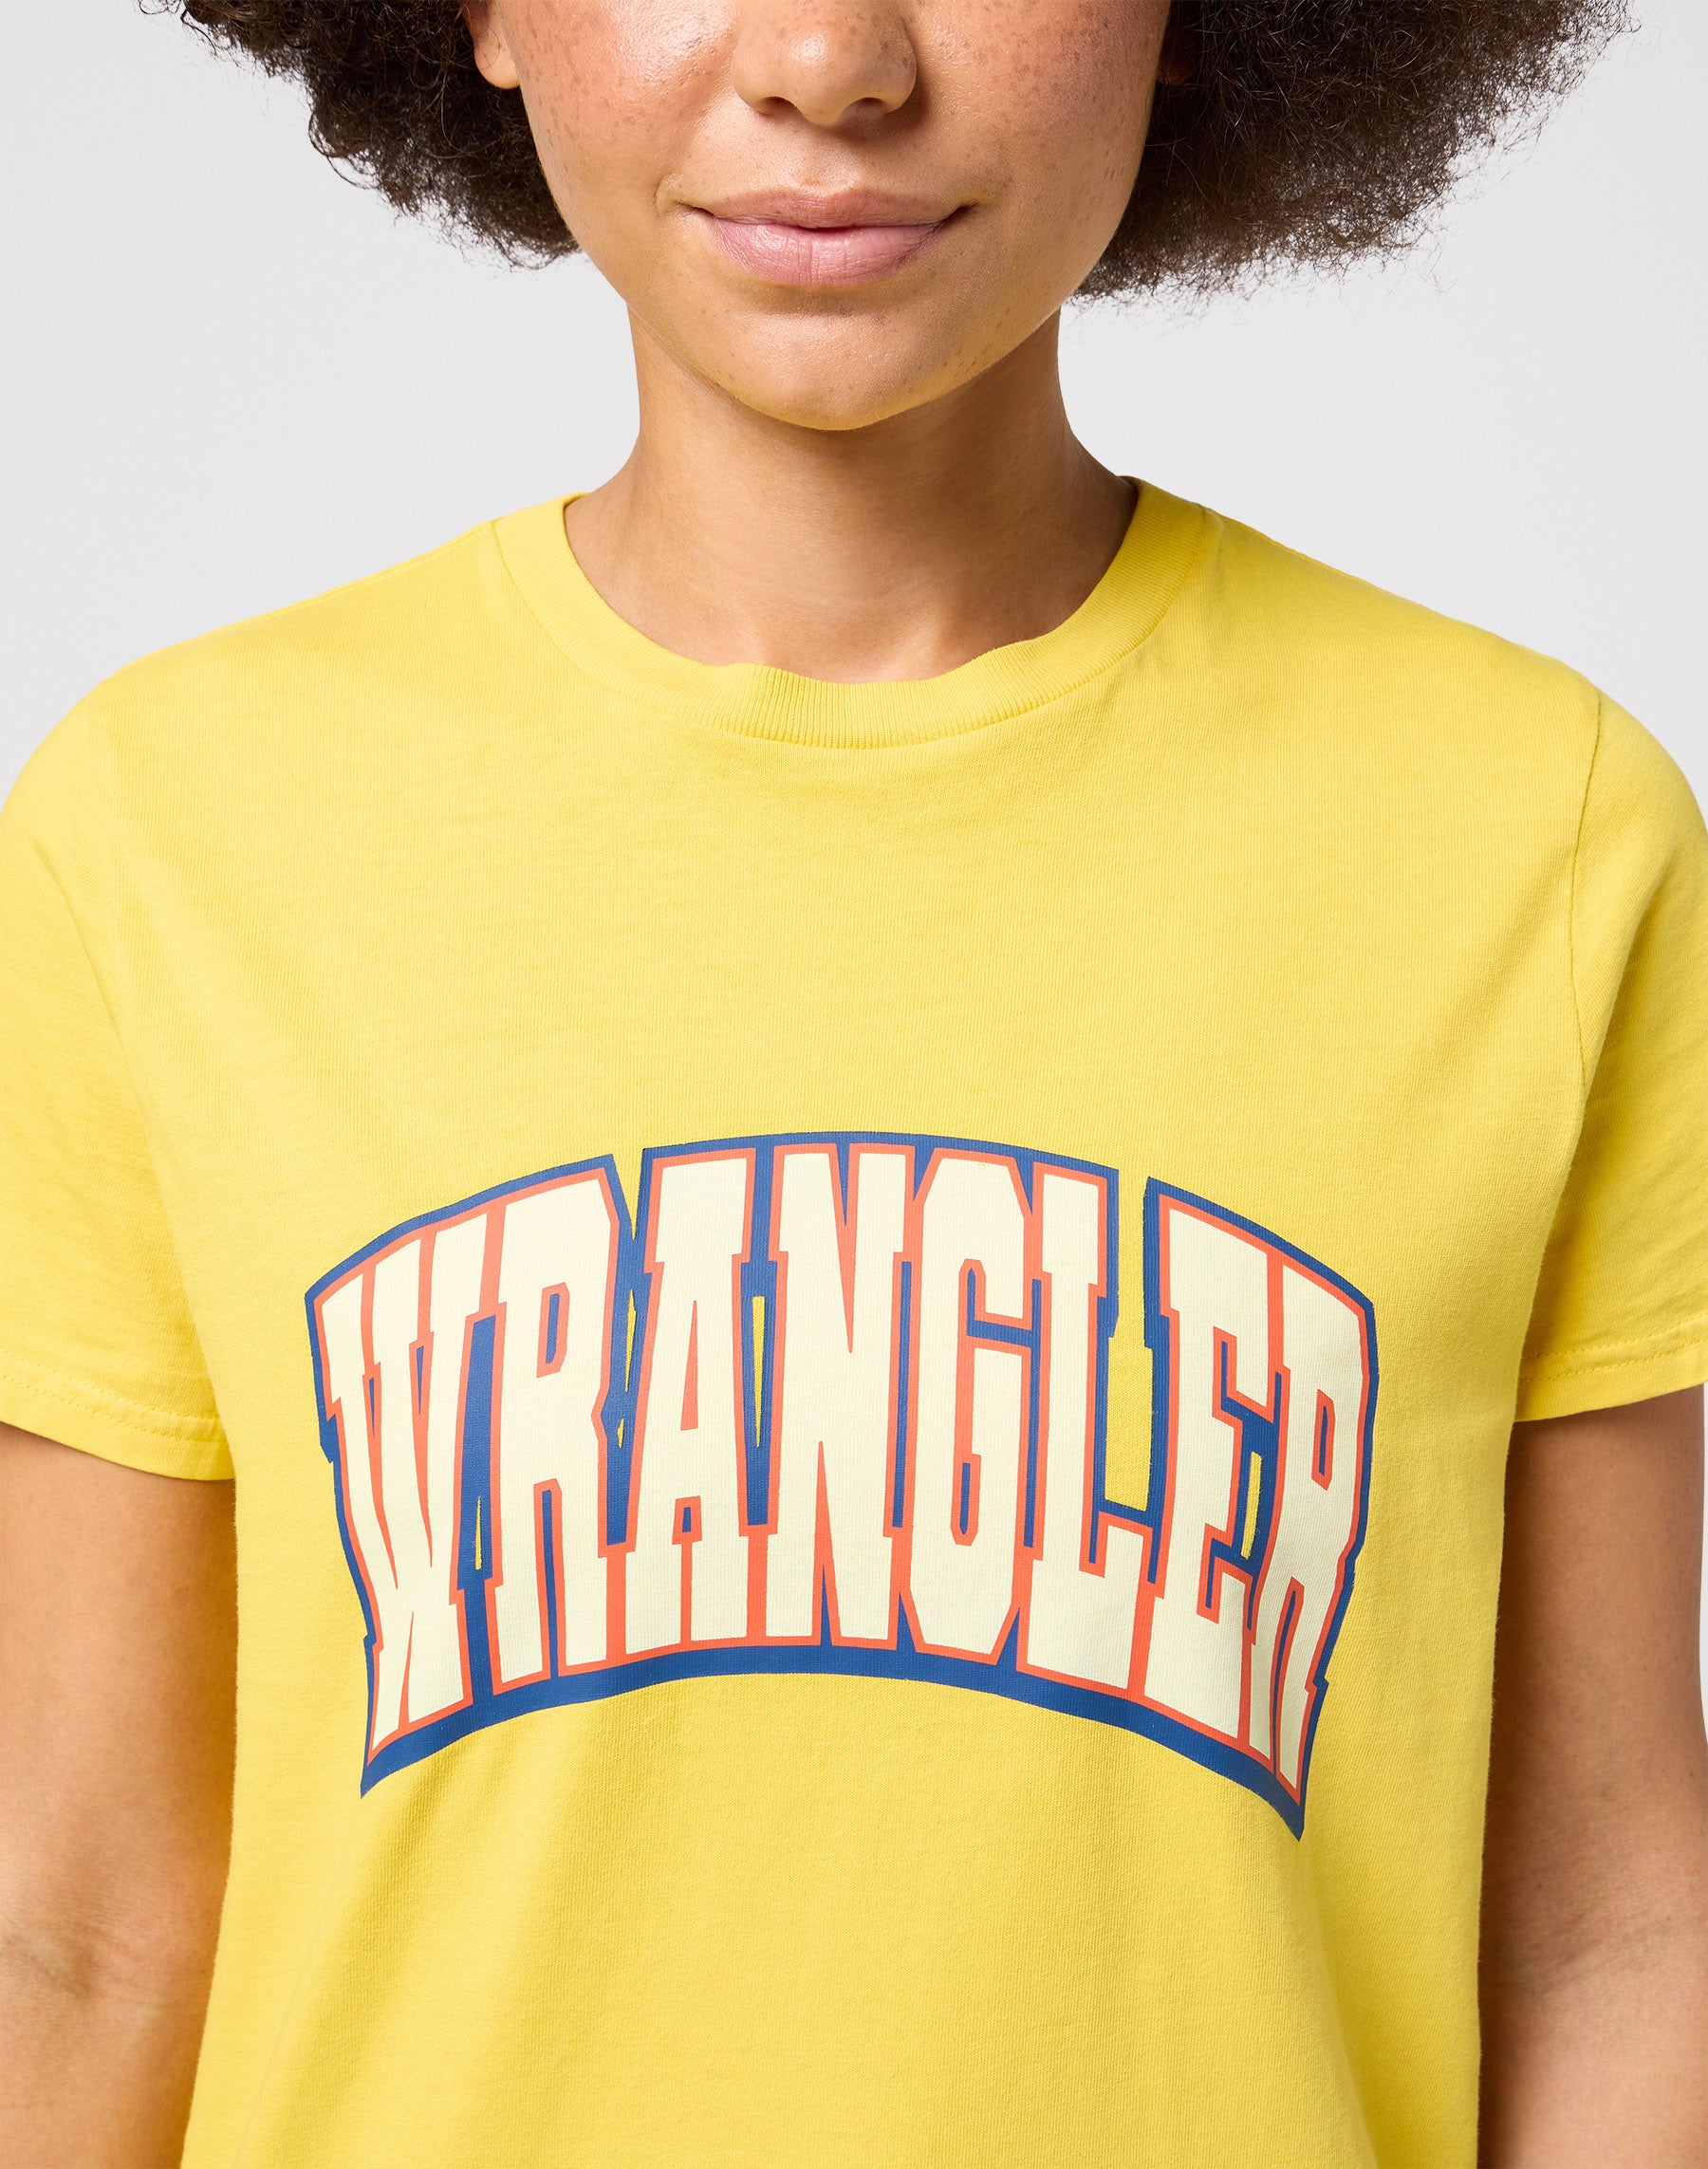 Regular Tee in Varsity Yellow T-Shirts Wrangler   